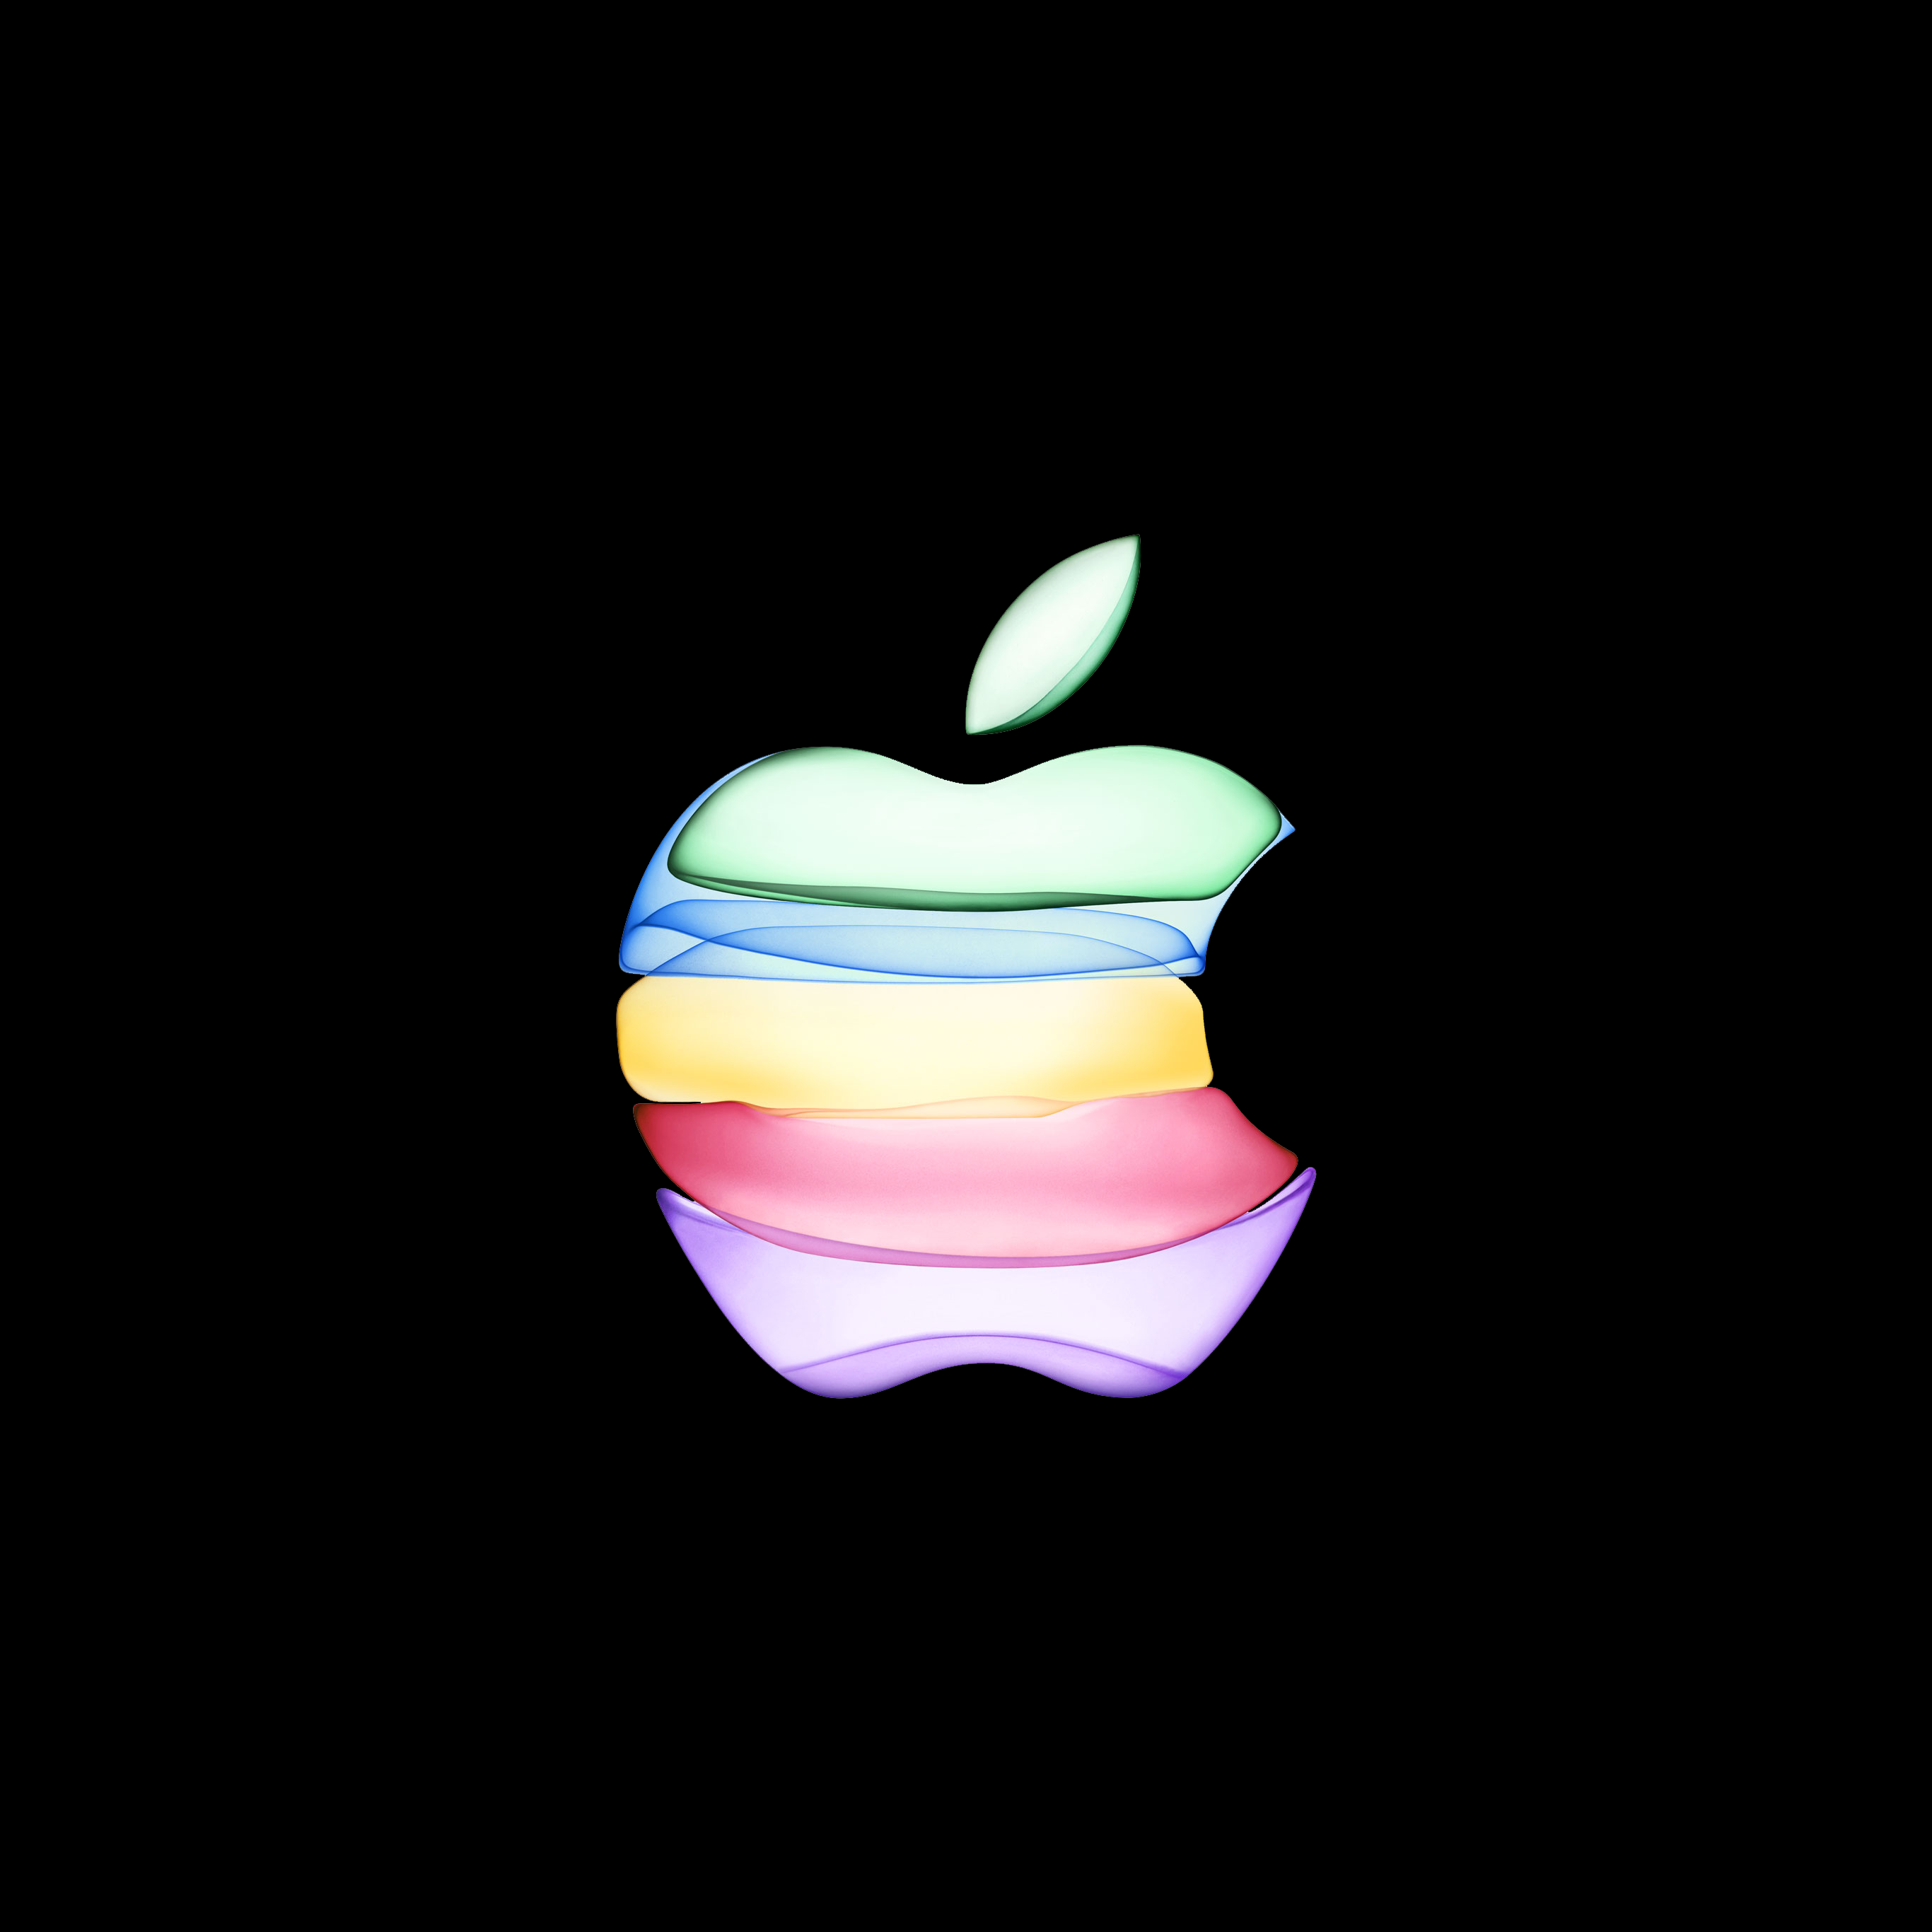 Ipad Apple アップル Free Apple Papers